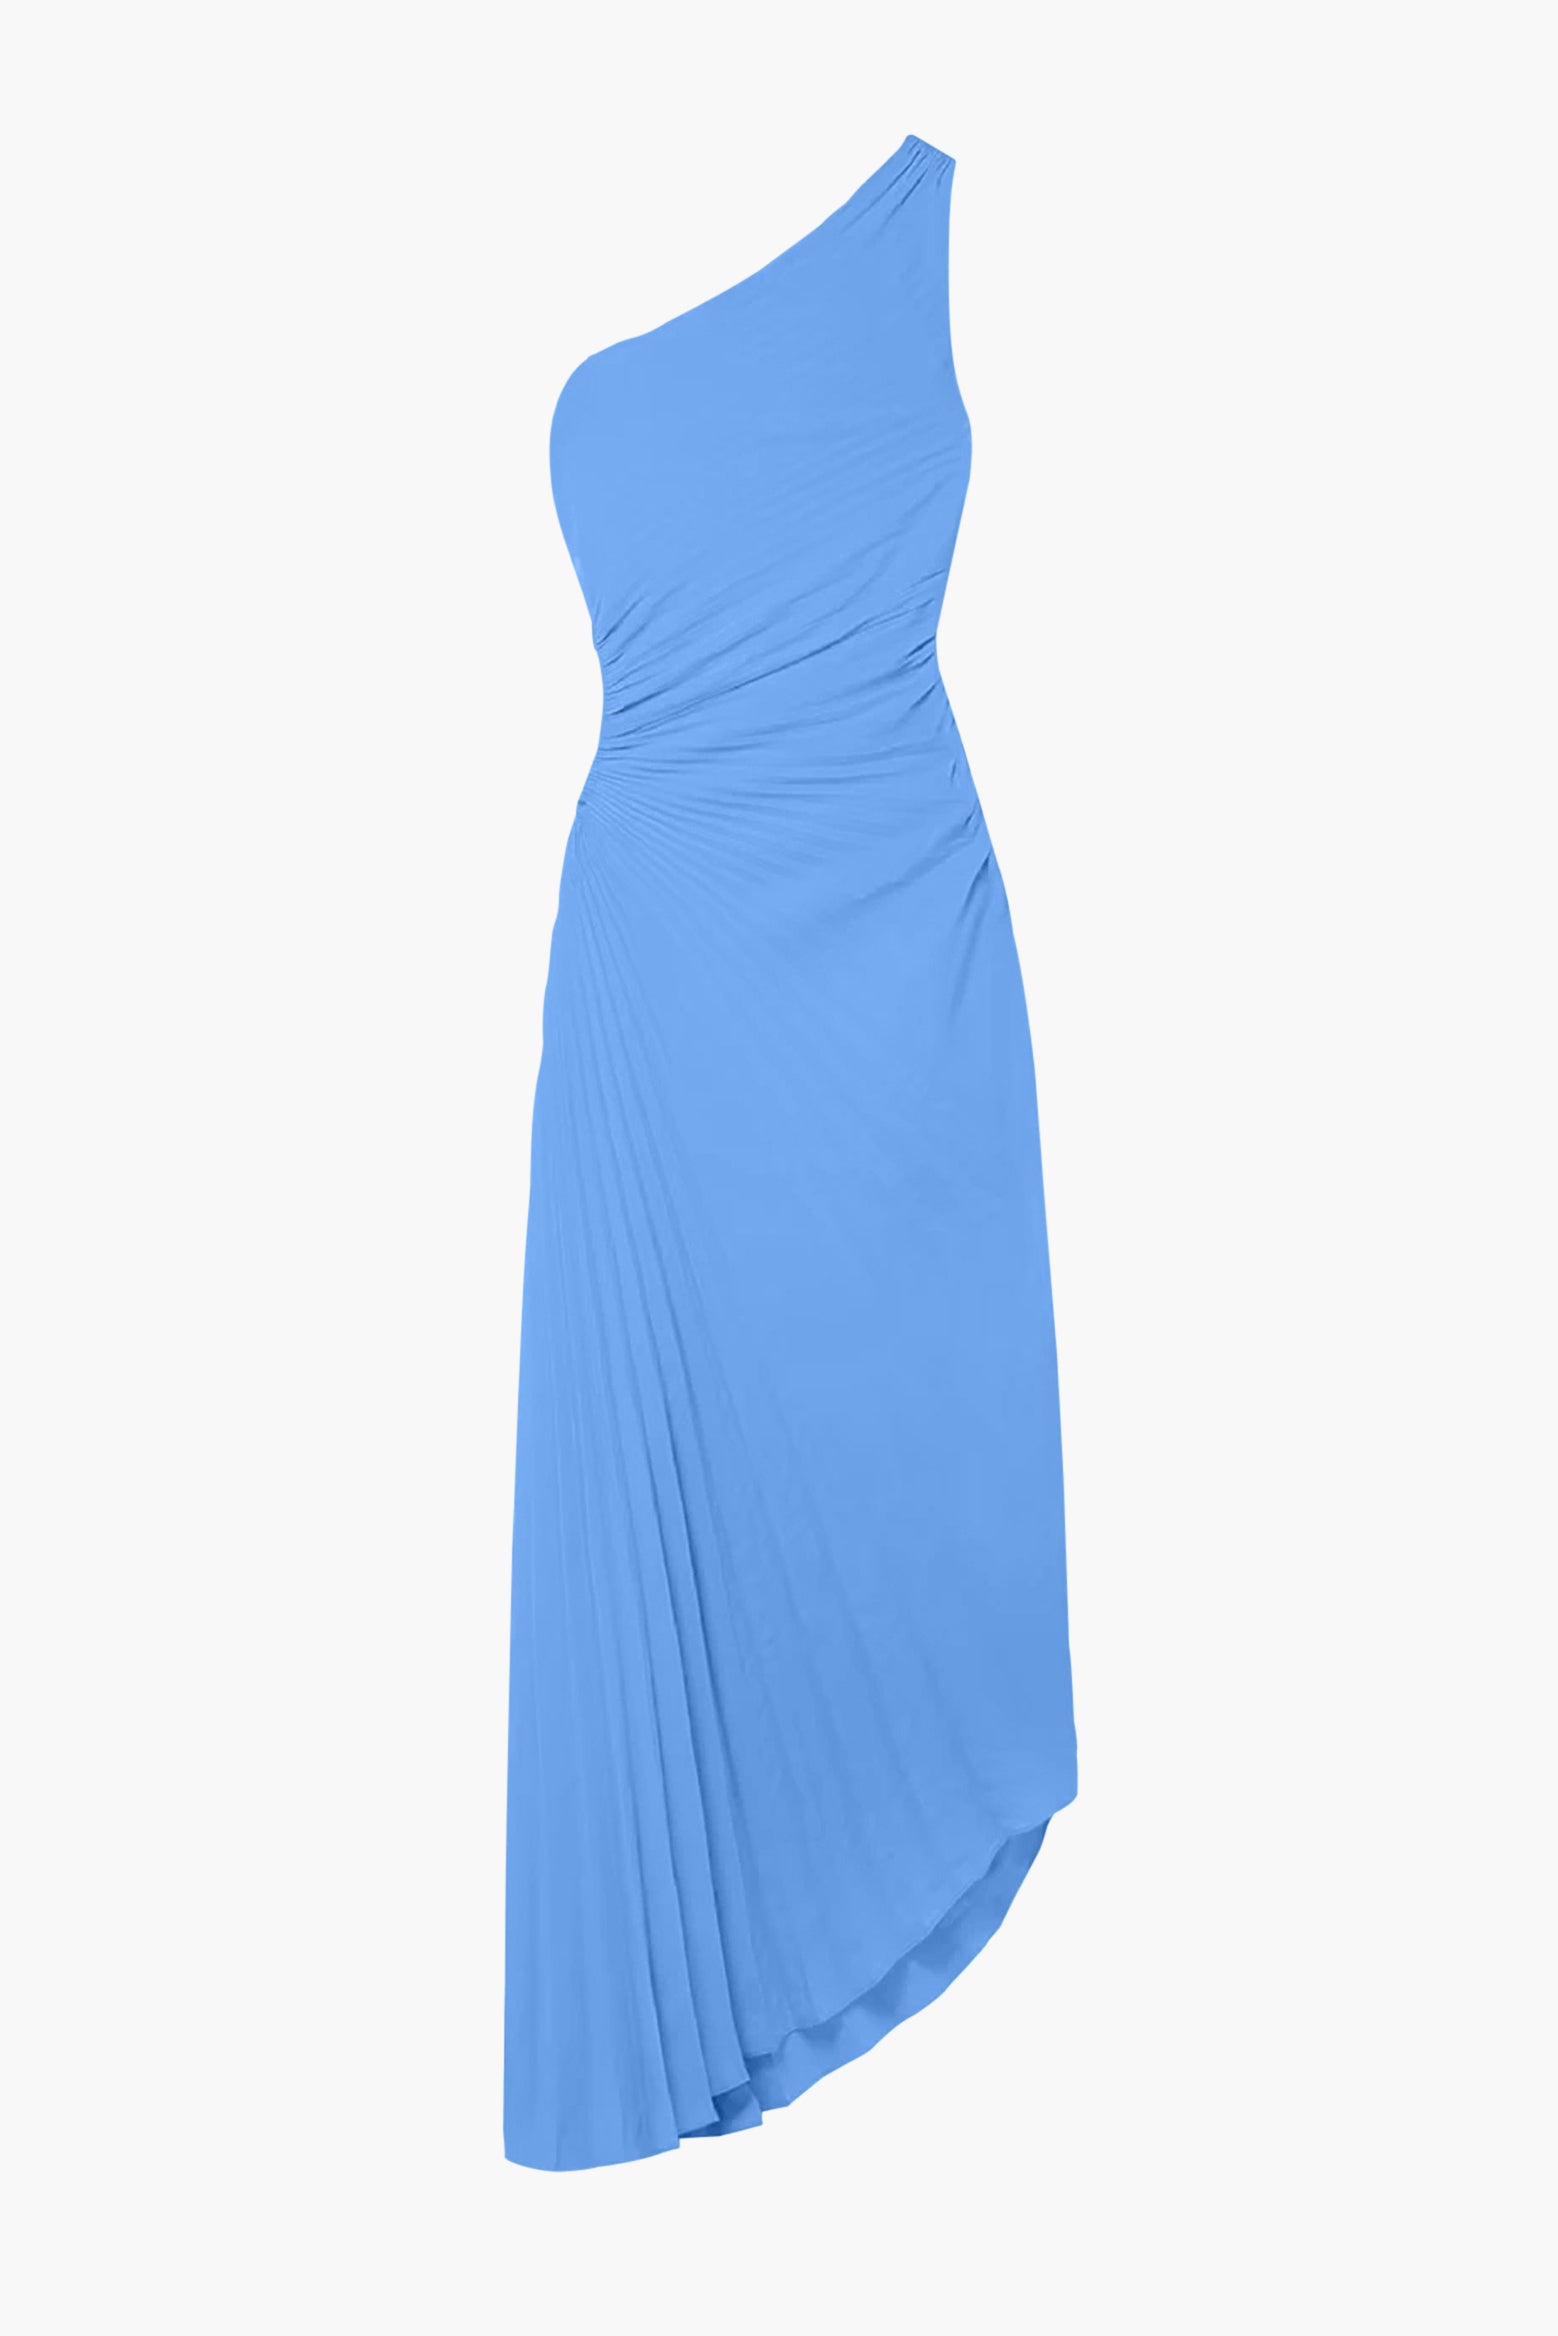 ALC Delfina Dress in Coastal Blue available at TNT The New Trend Australia.